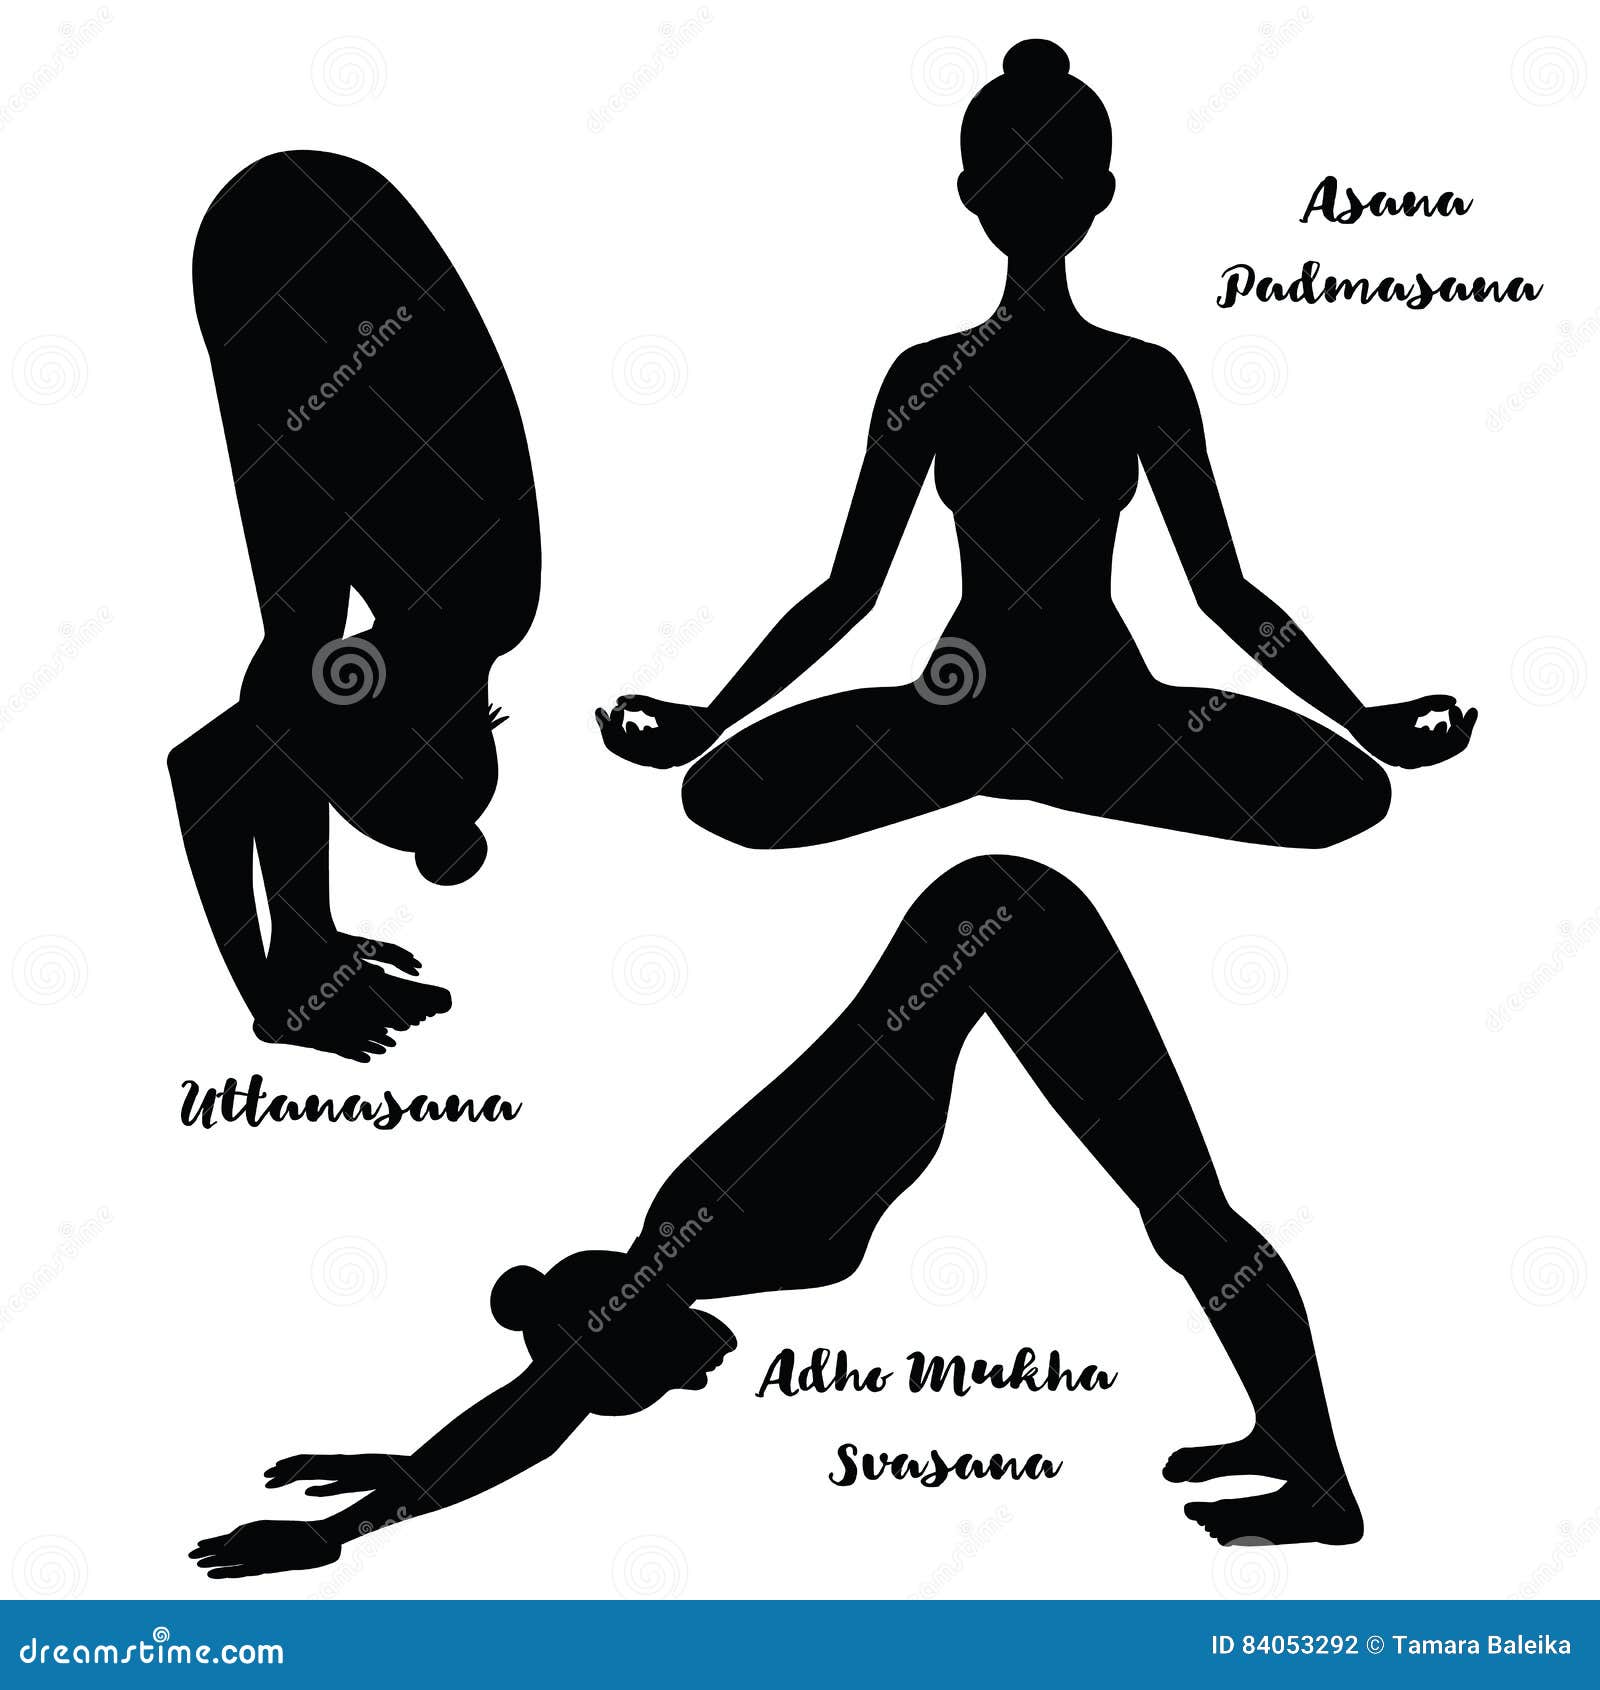 Padmasana and variations — My yoga blog